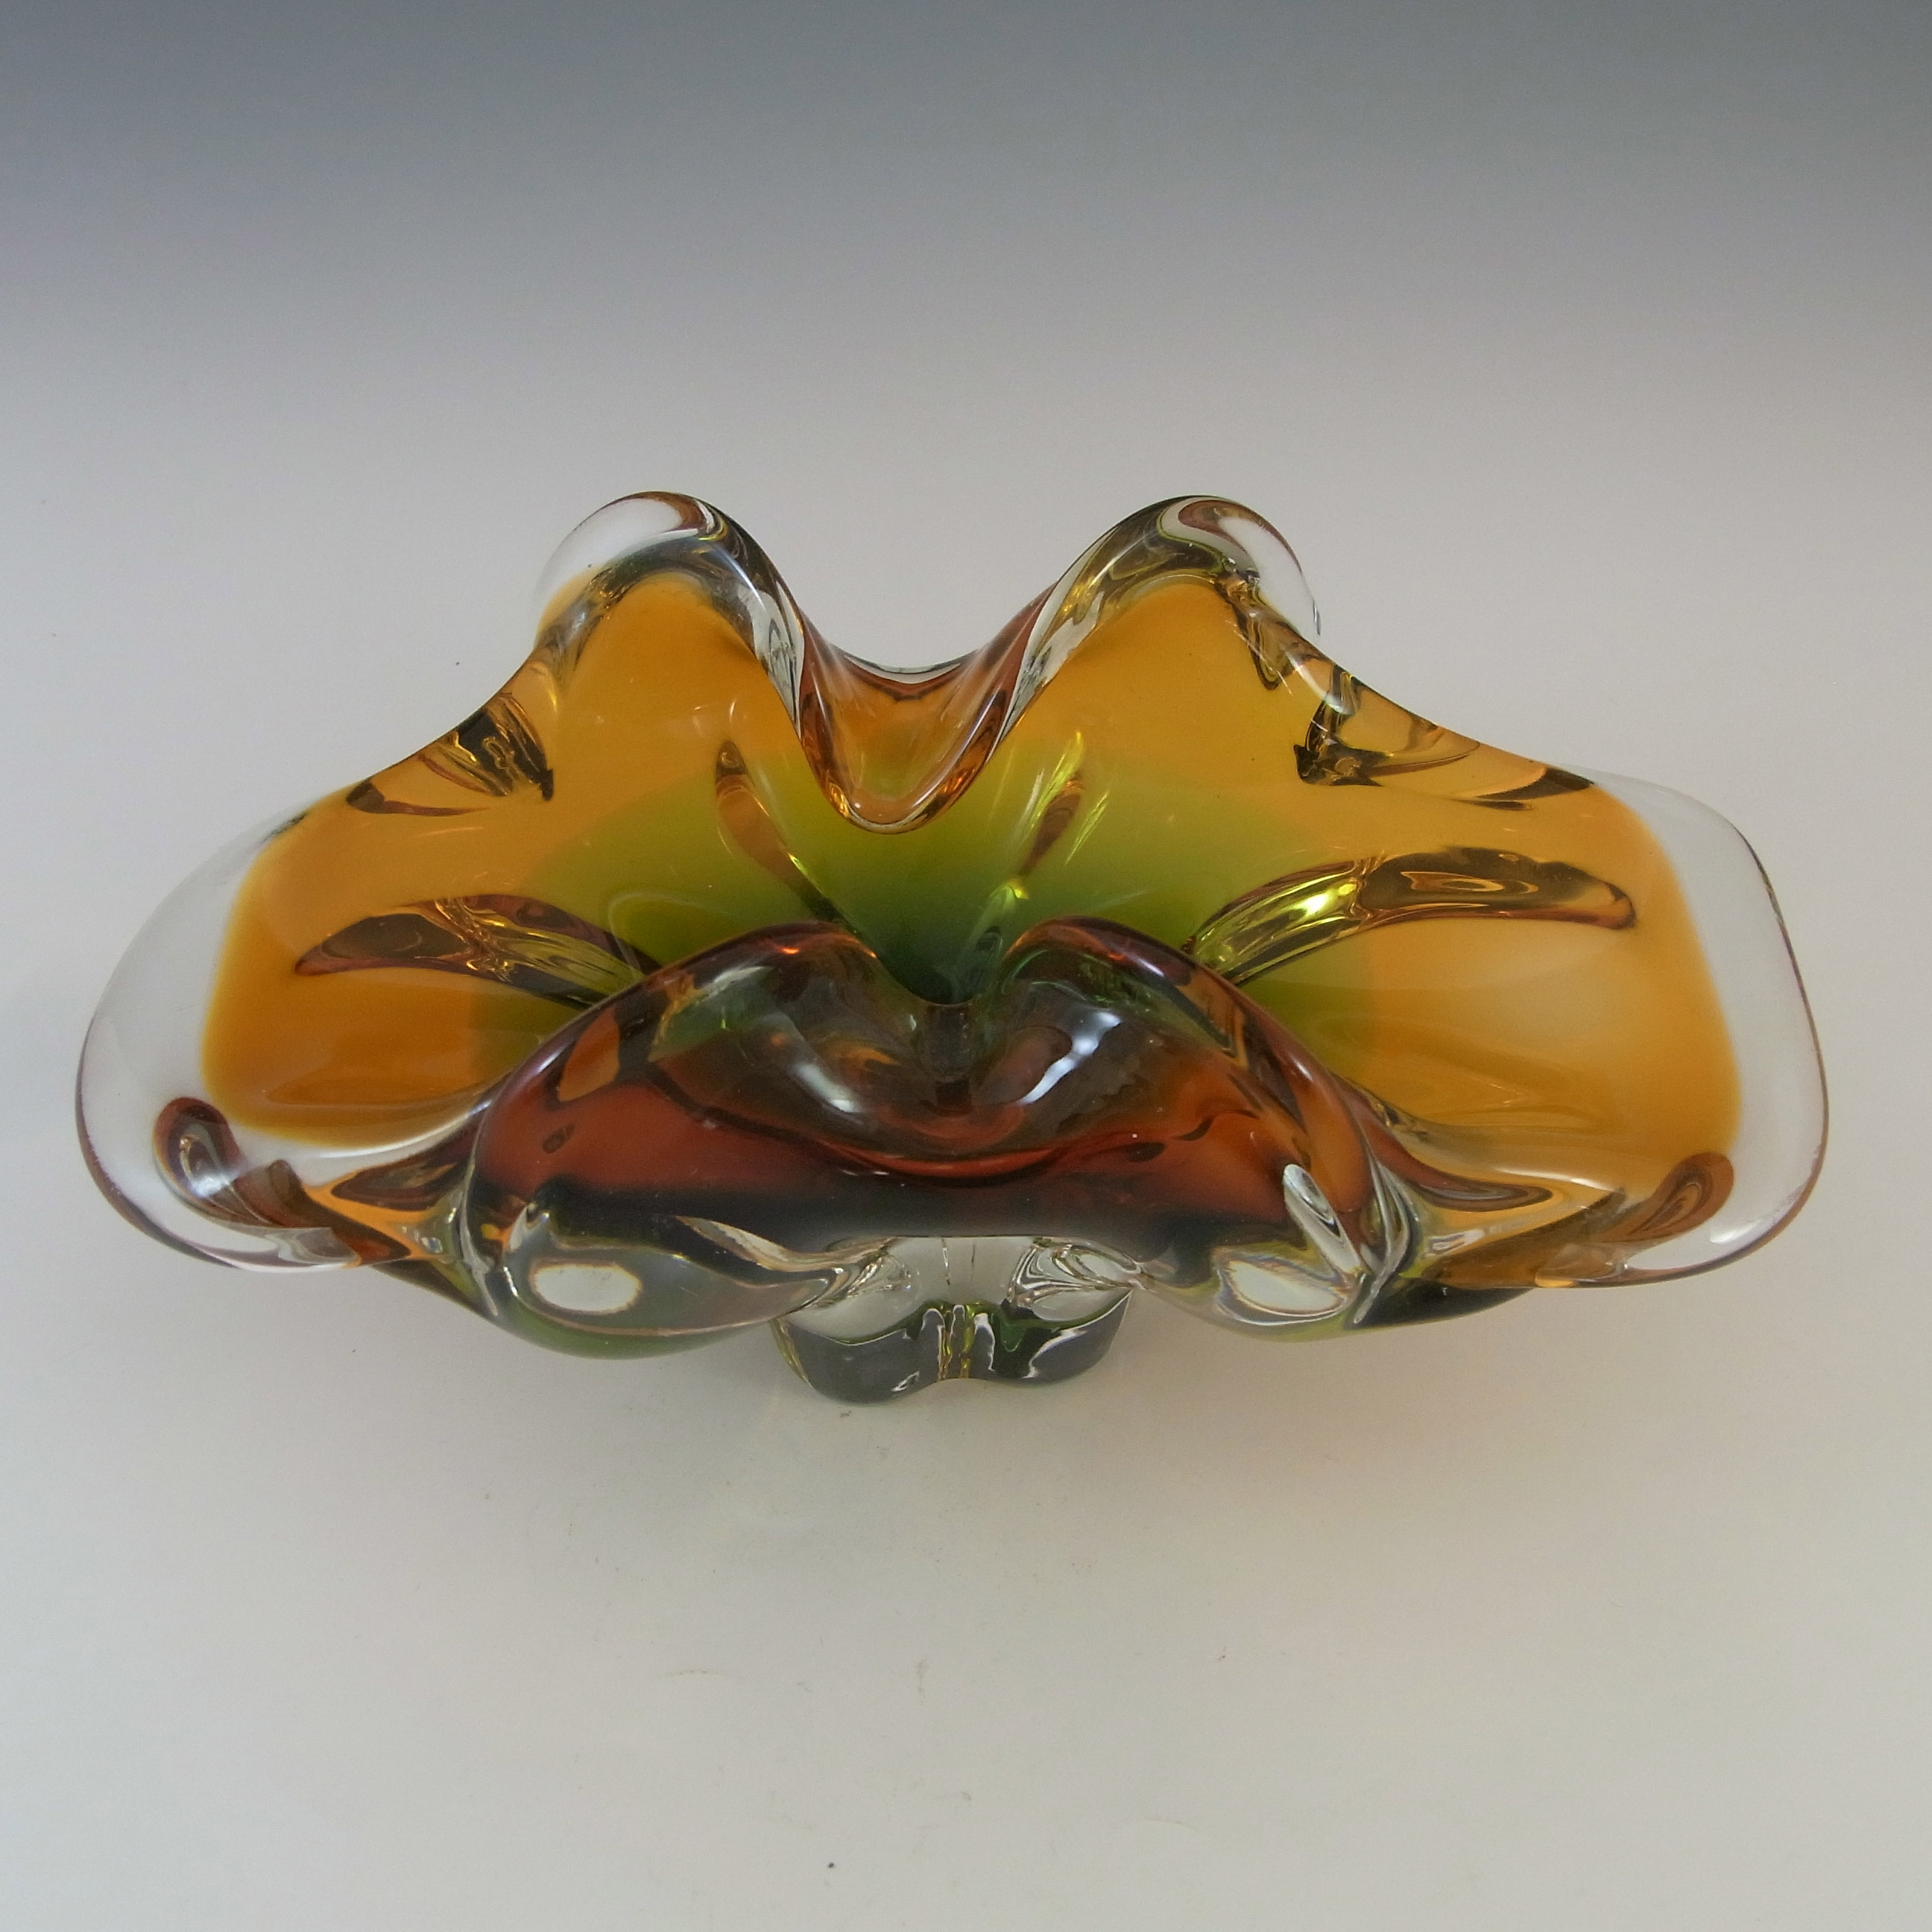 Chřibská Mid Century Czech Green & Orange Glass Bowl - Click Image to Close